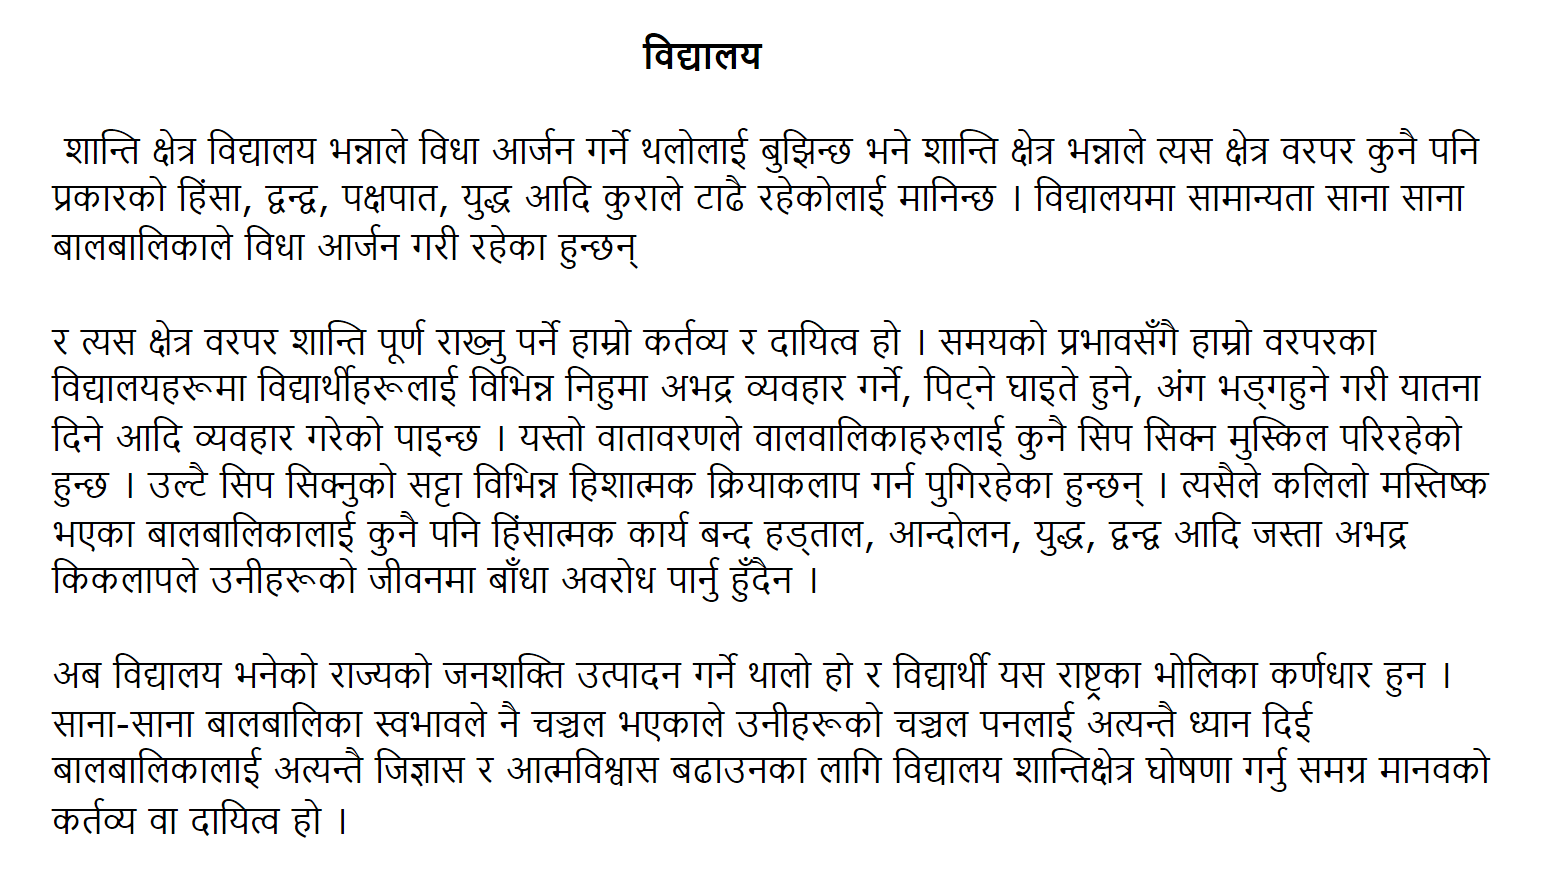 Essay on my school in Nepali Language, essay on Mero bidyalaya for class 4,class 5,class6, class7,class8,essay on my school, nepaliessay1.blogspot.com